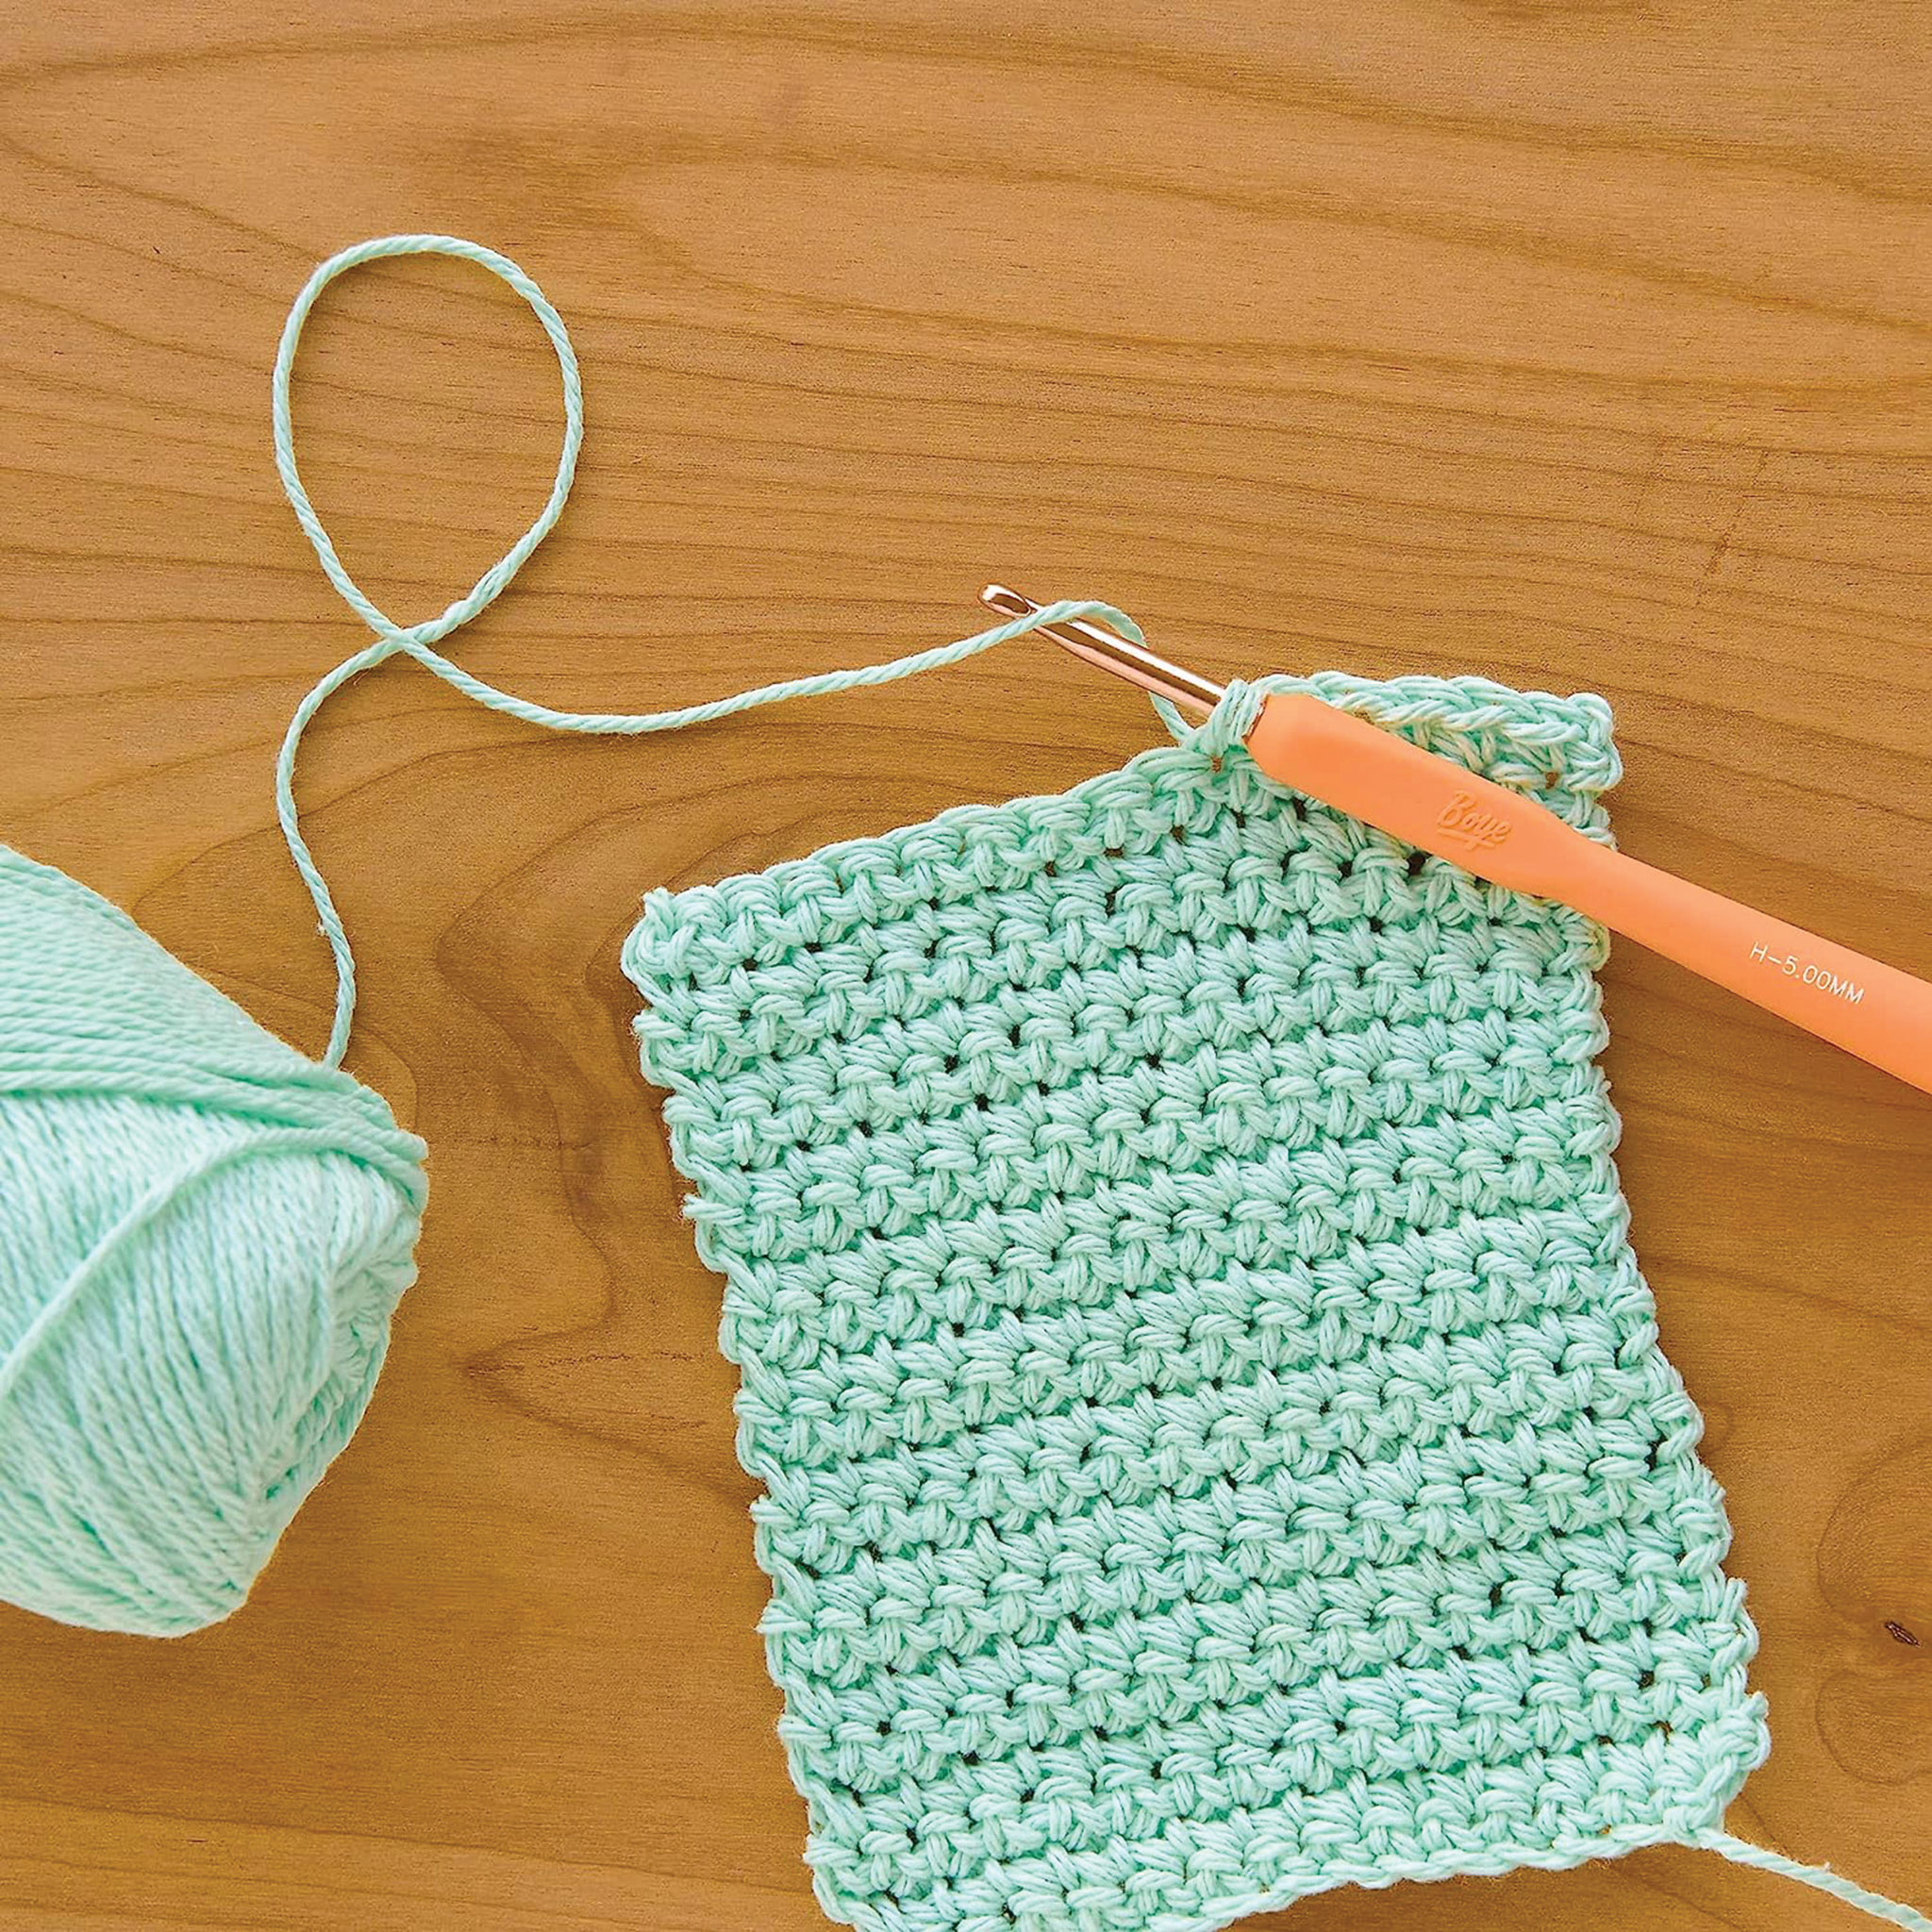 Boye Ergo Crochet Hook Set - Warm, Pkg of 4, BLICK Art Materials